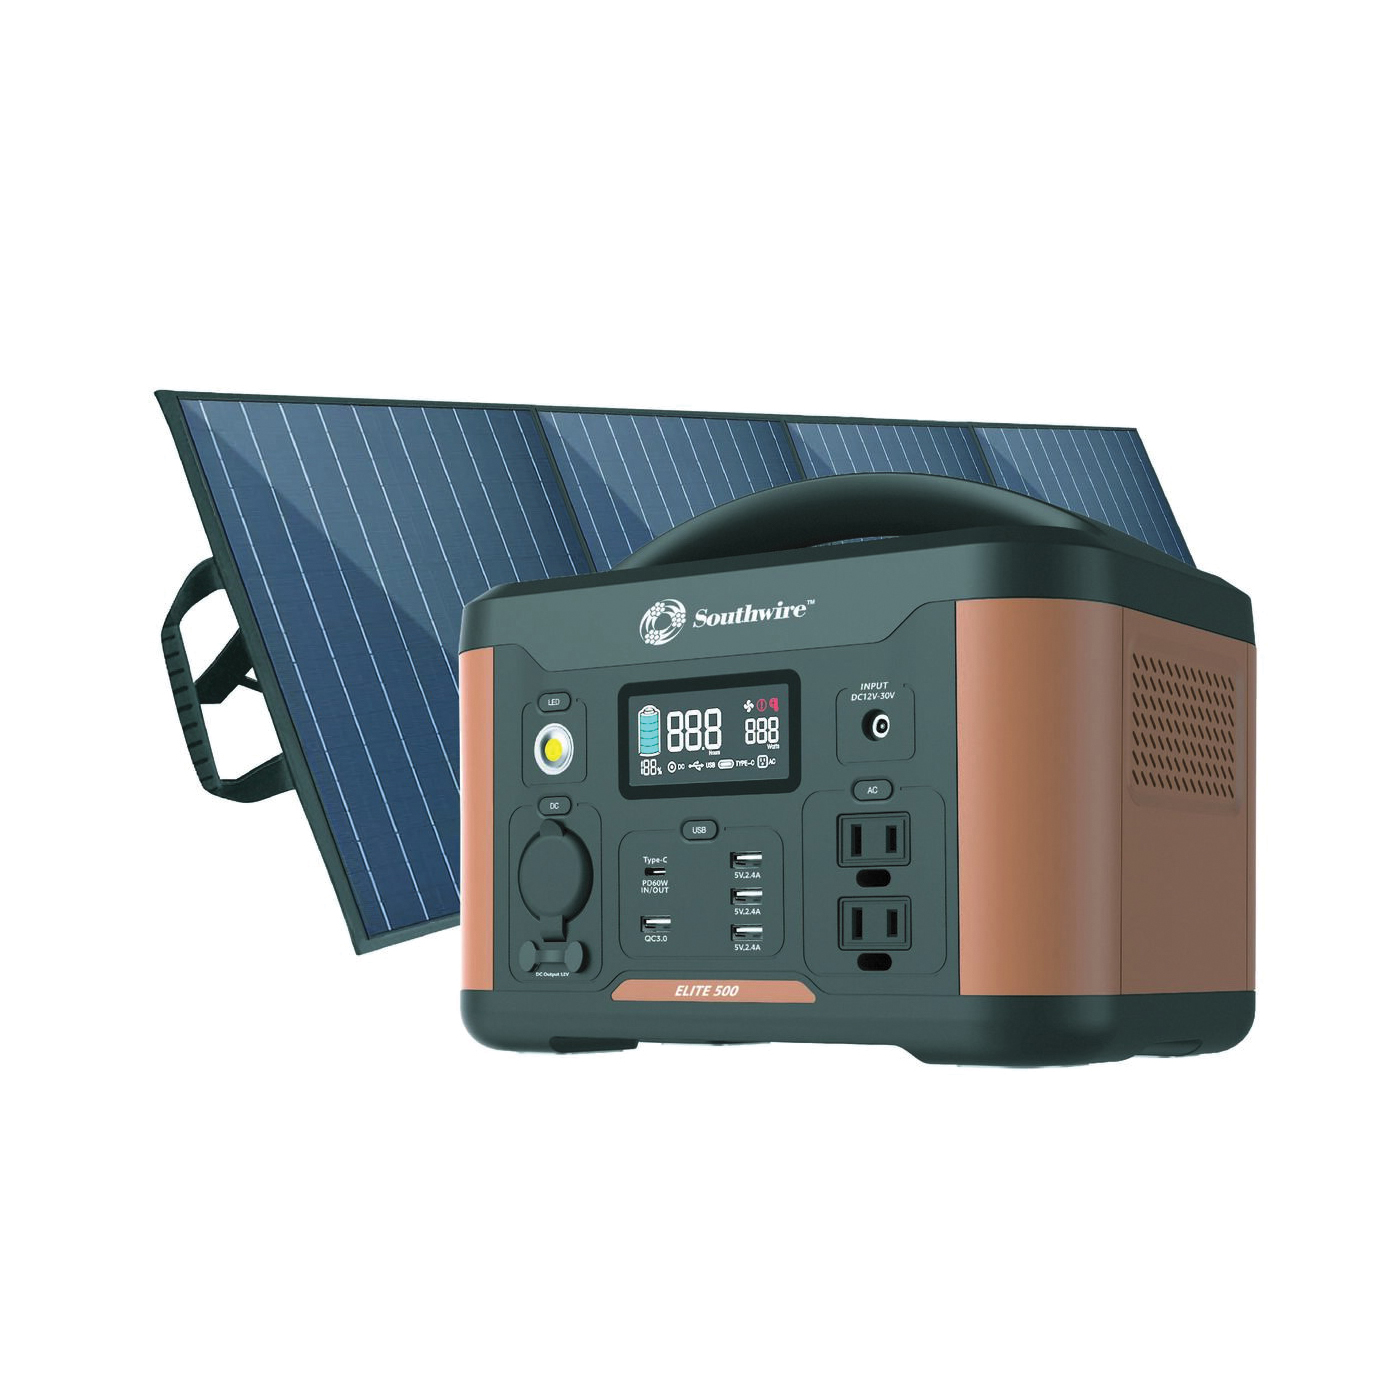 Southwire Elite 500 53252K Portable Power Station, 5, 10 A, 12 VDC, 5 -Port, 2 -Outlet, 3 Prong Plug